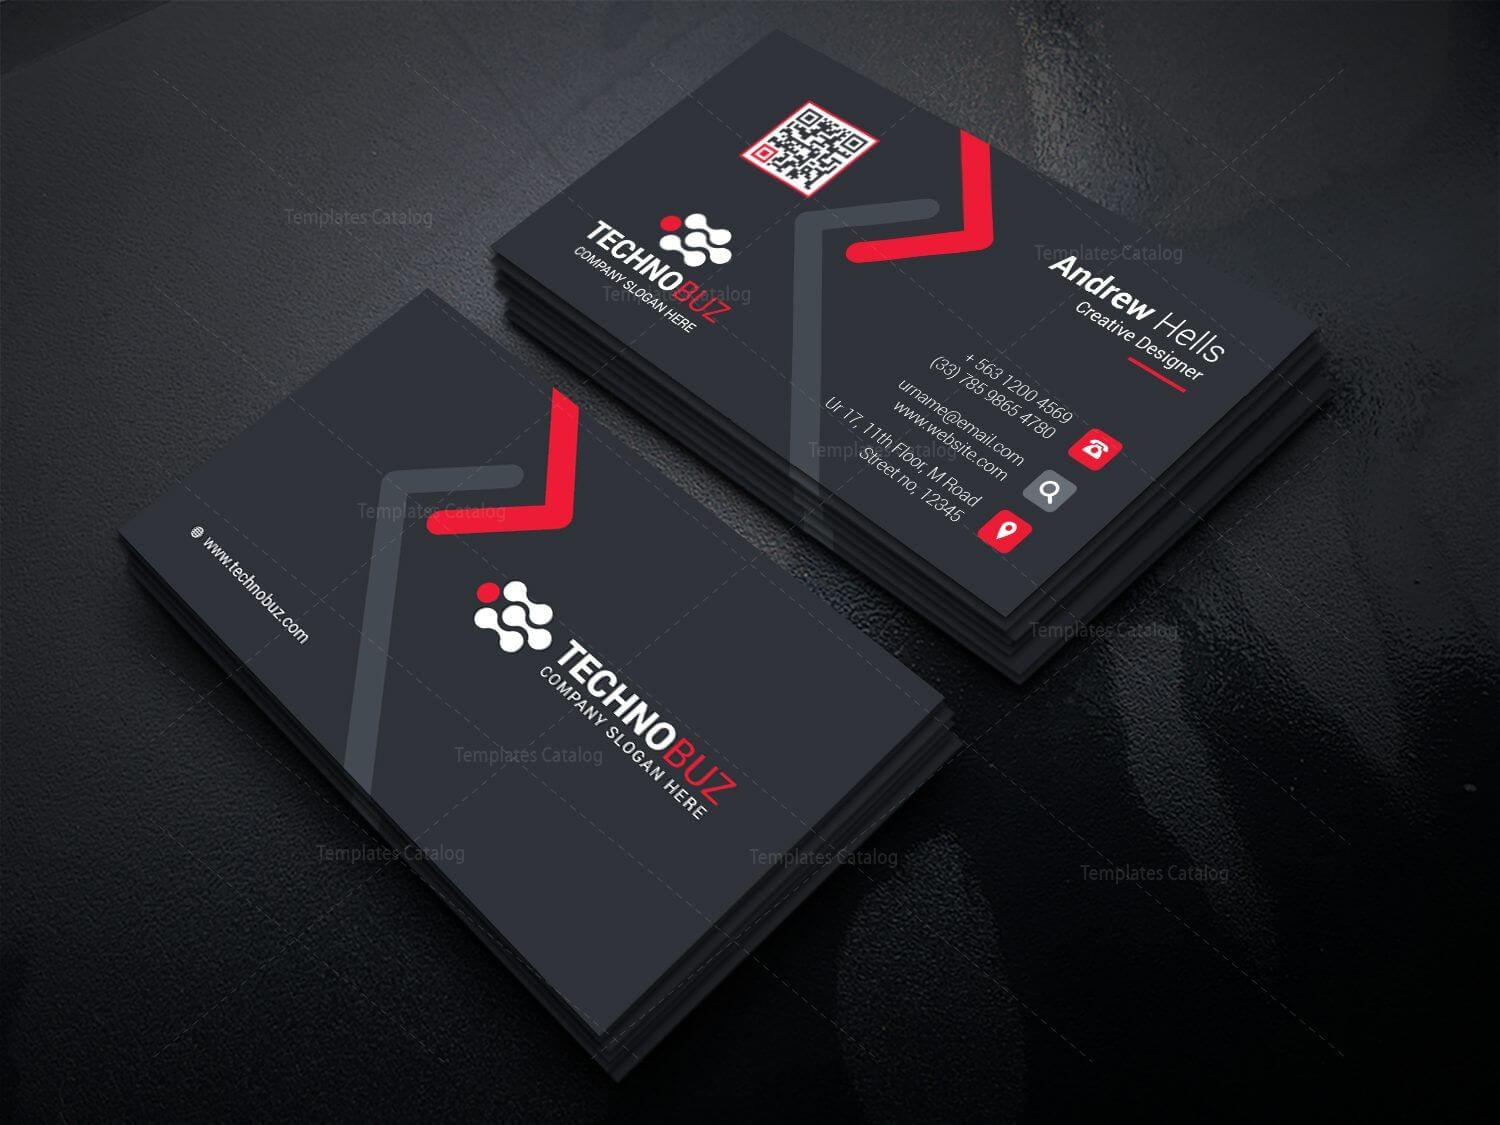 High Tech Company Business Card Template 000736 | Graphic Within Company Business Cards Templates